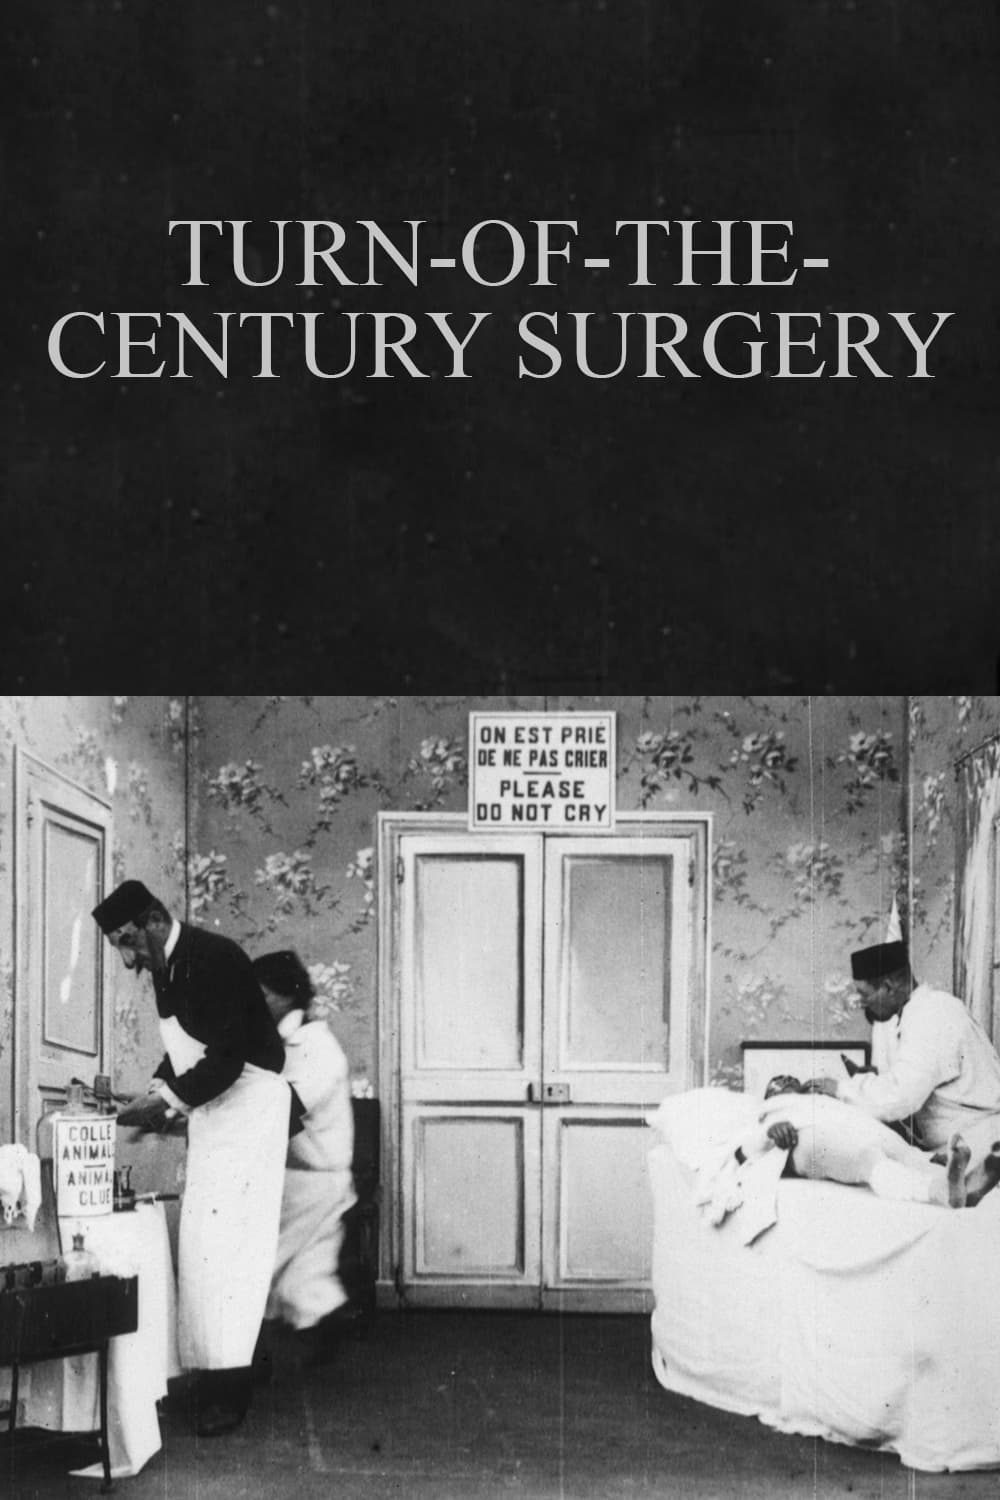 Turn-of-the-Century Surgery